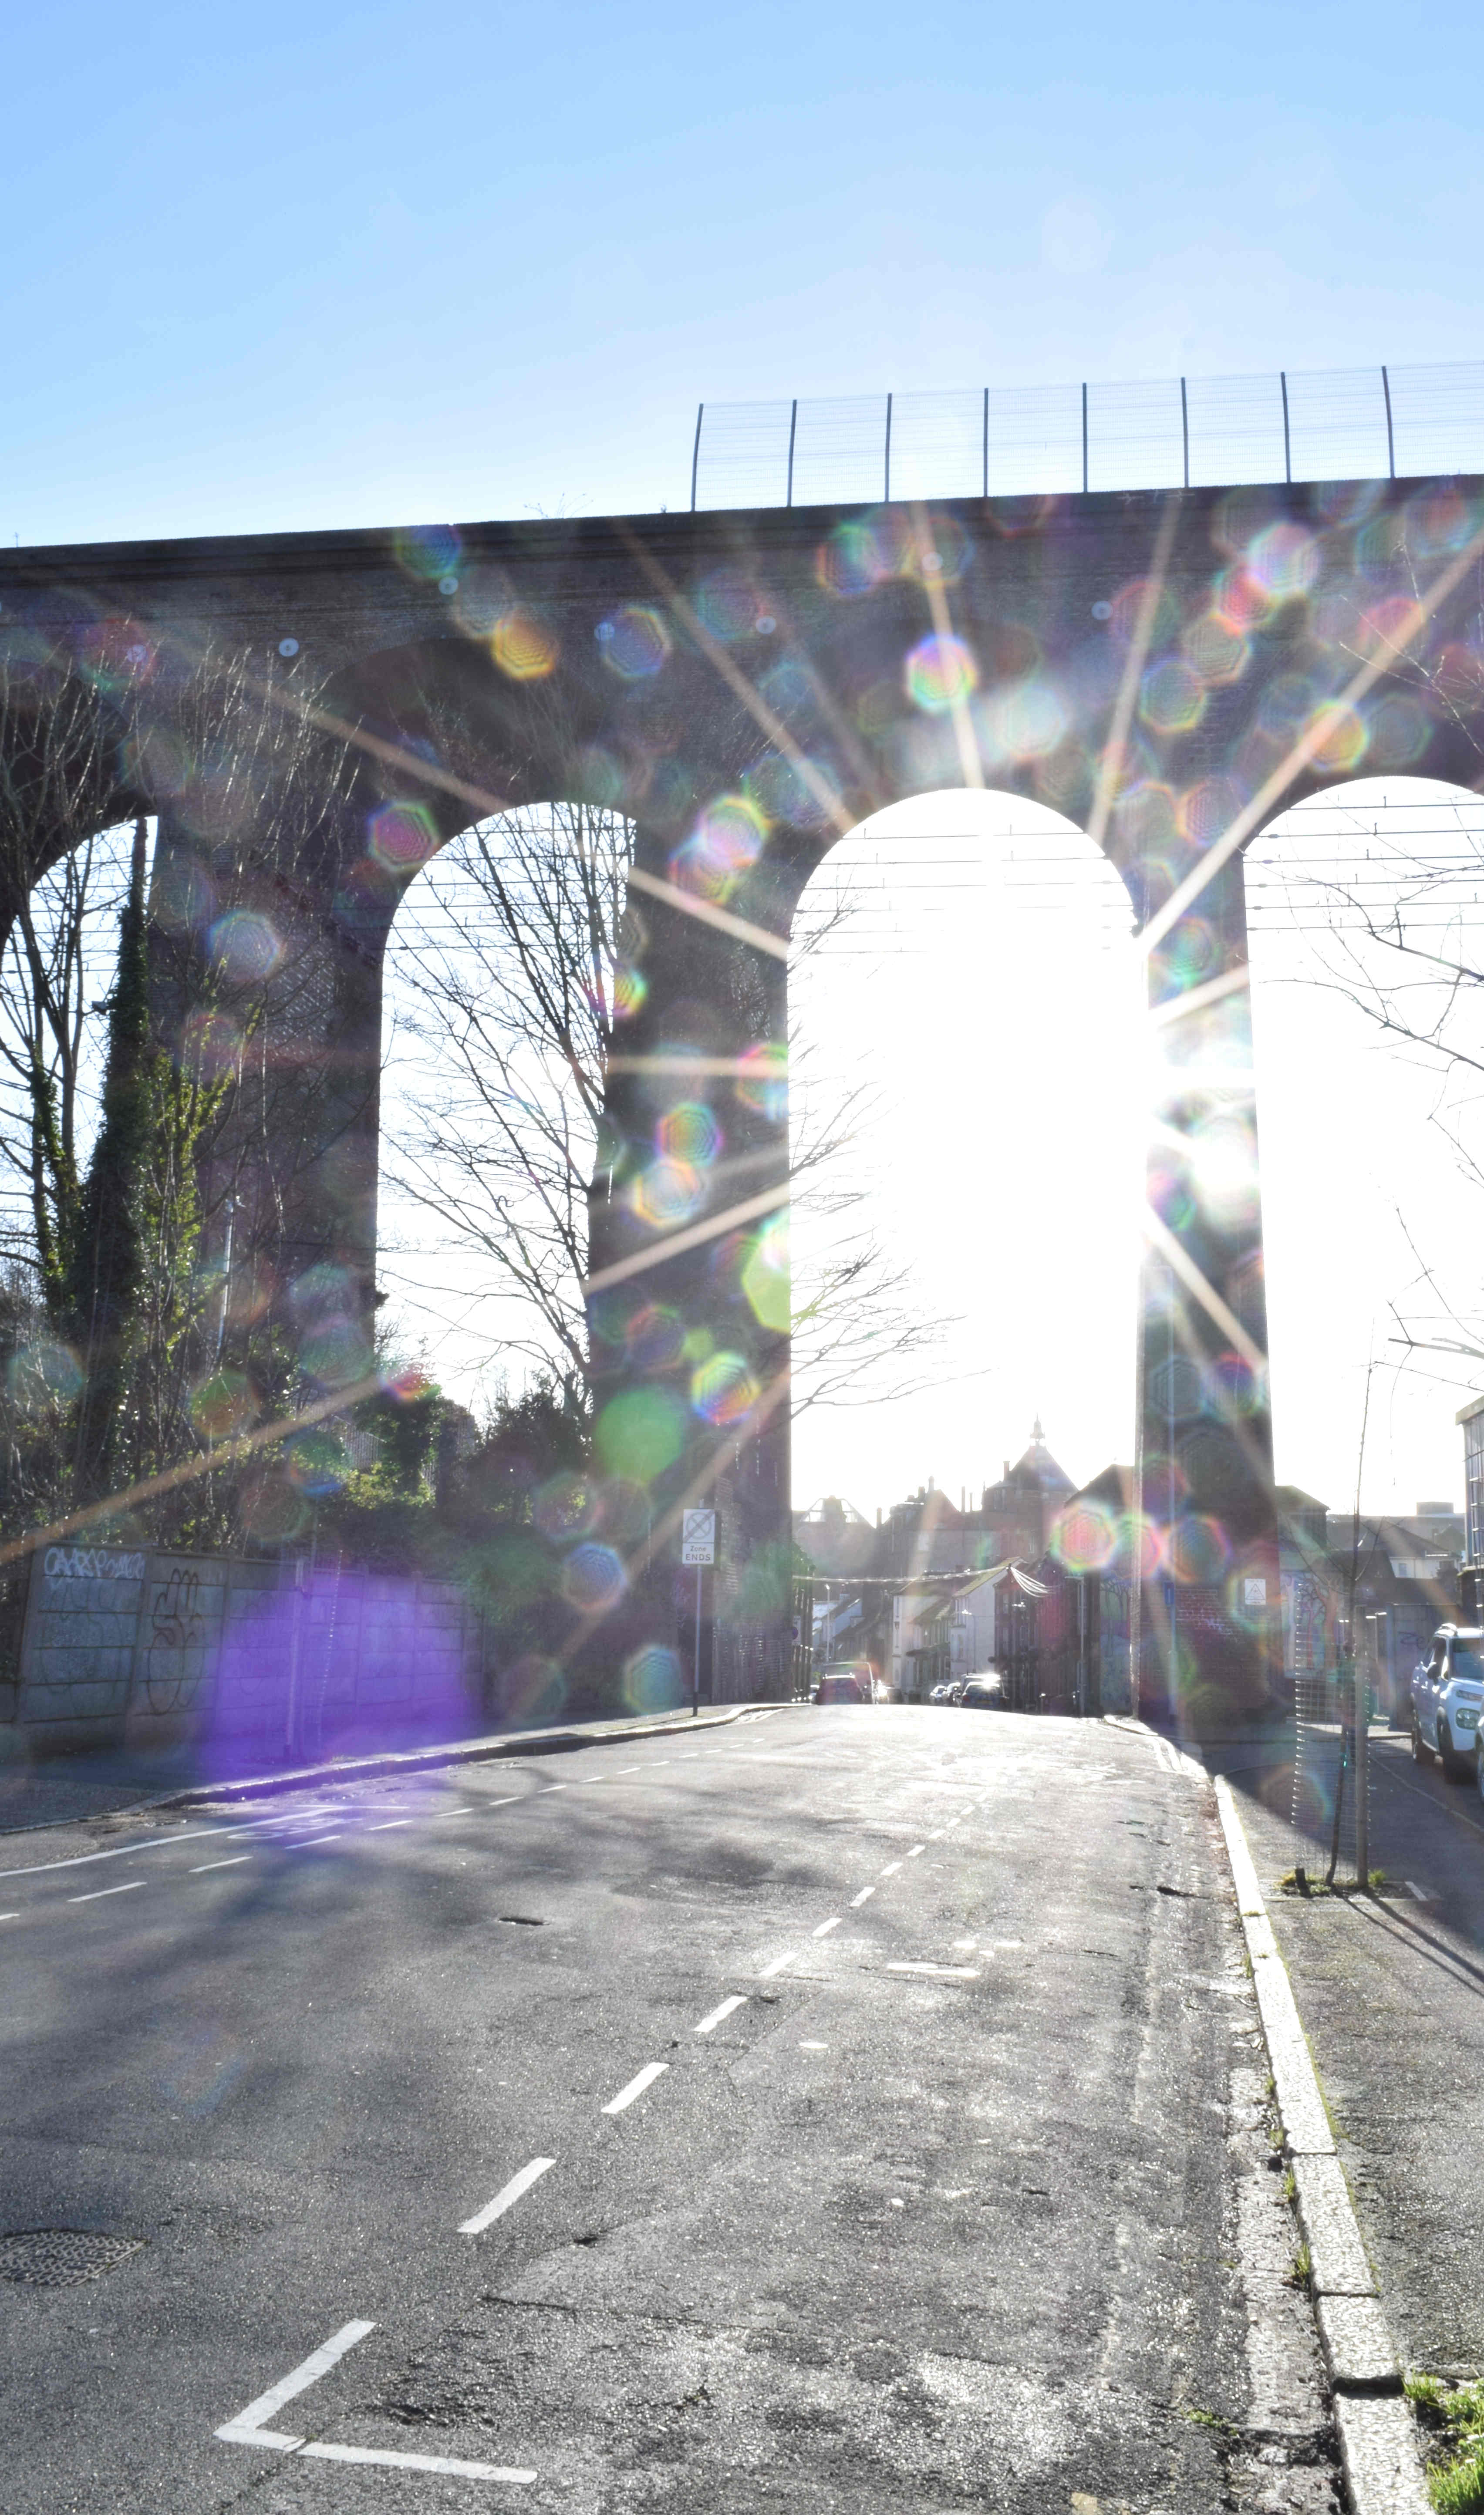 Sunlight through the viaduct